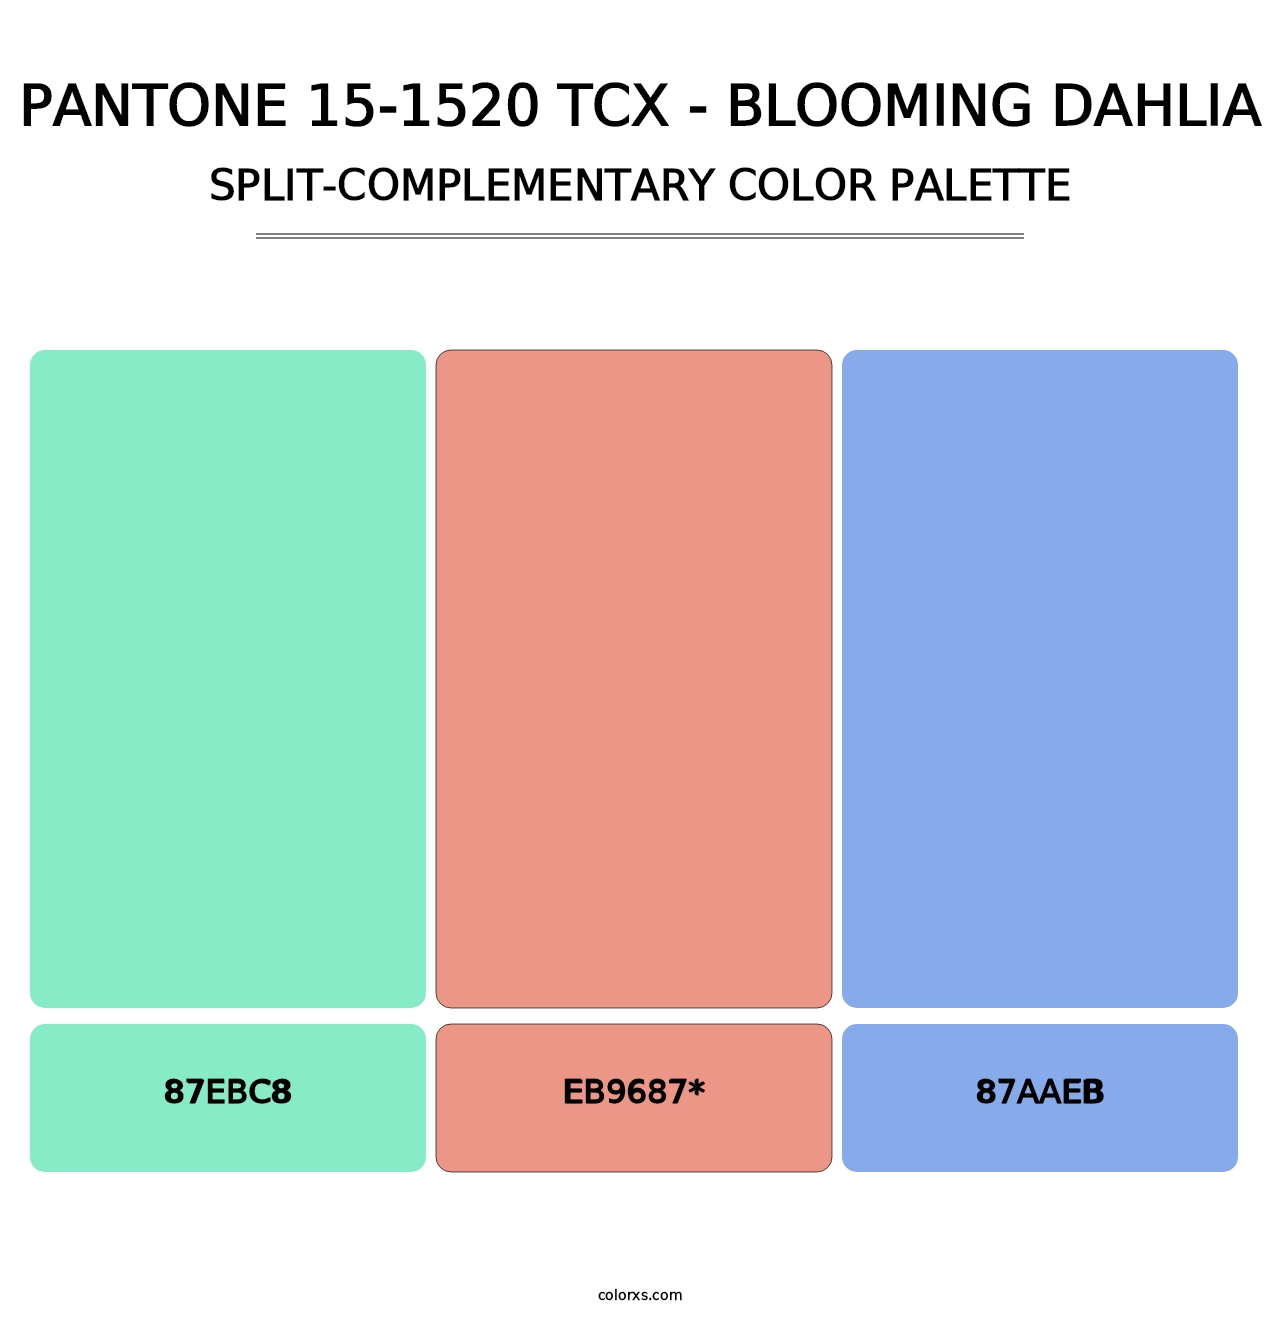 PANTONE 15-1520 TCX - Blooming Dahlia - Split-Complementary Color Palette